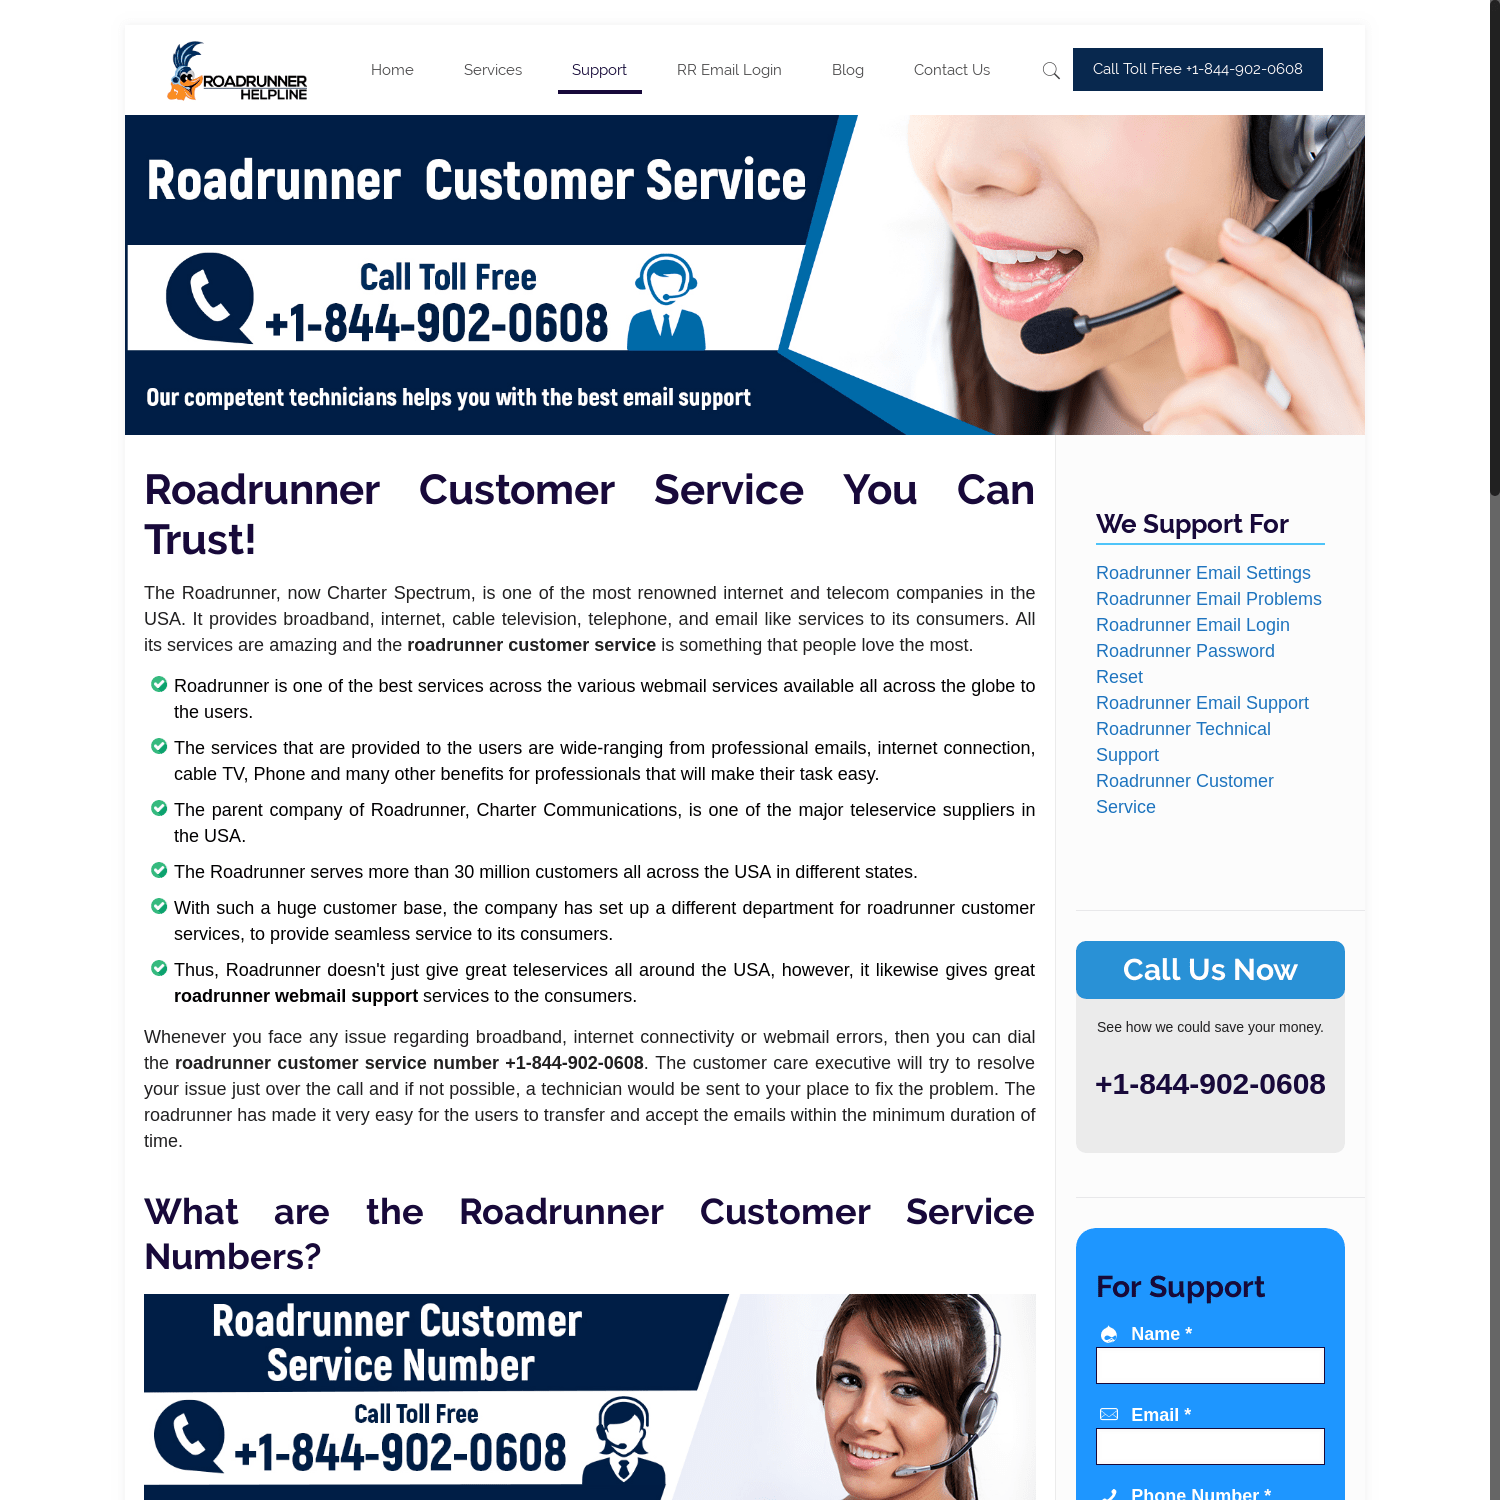 (+1-844-902-0608) Roadrunner Customer Service Phone Number